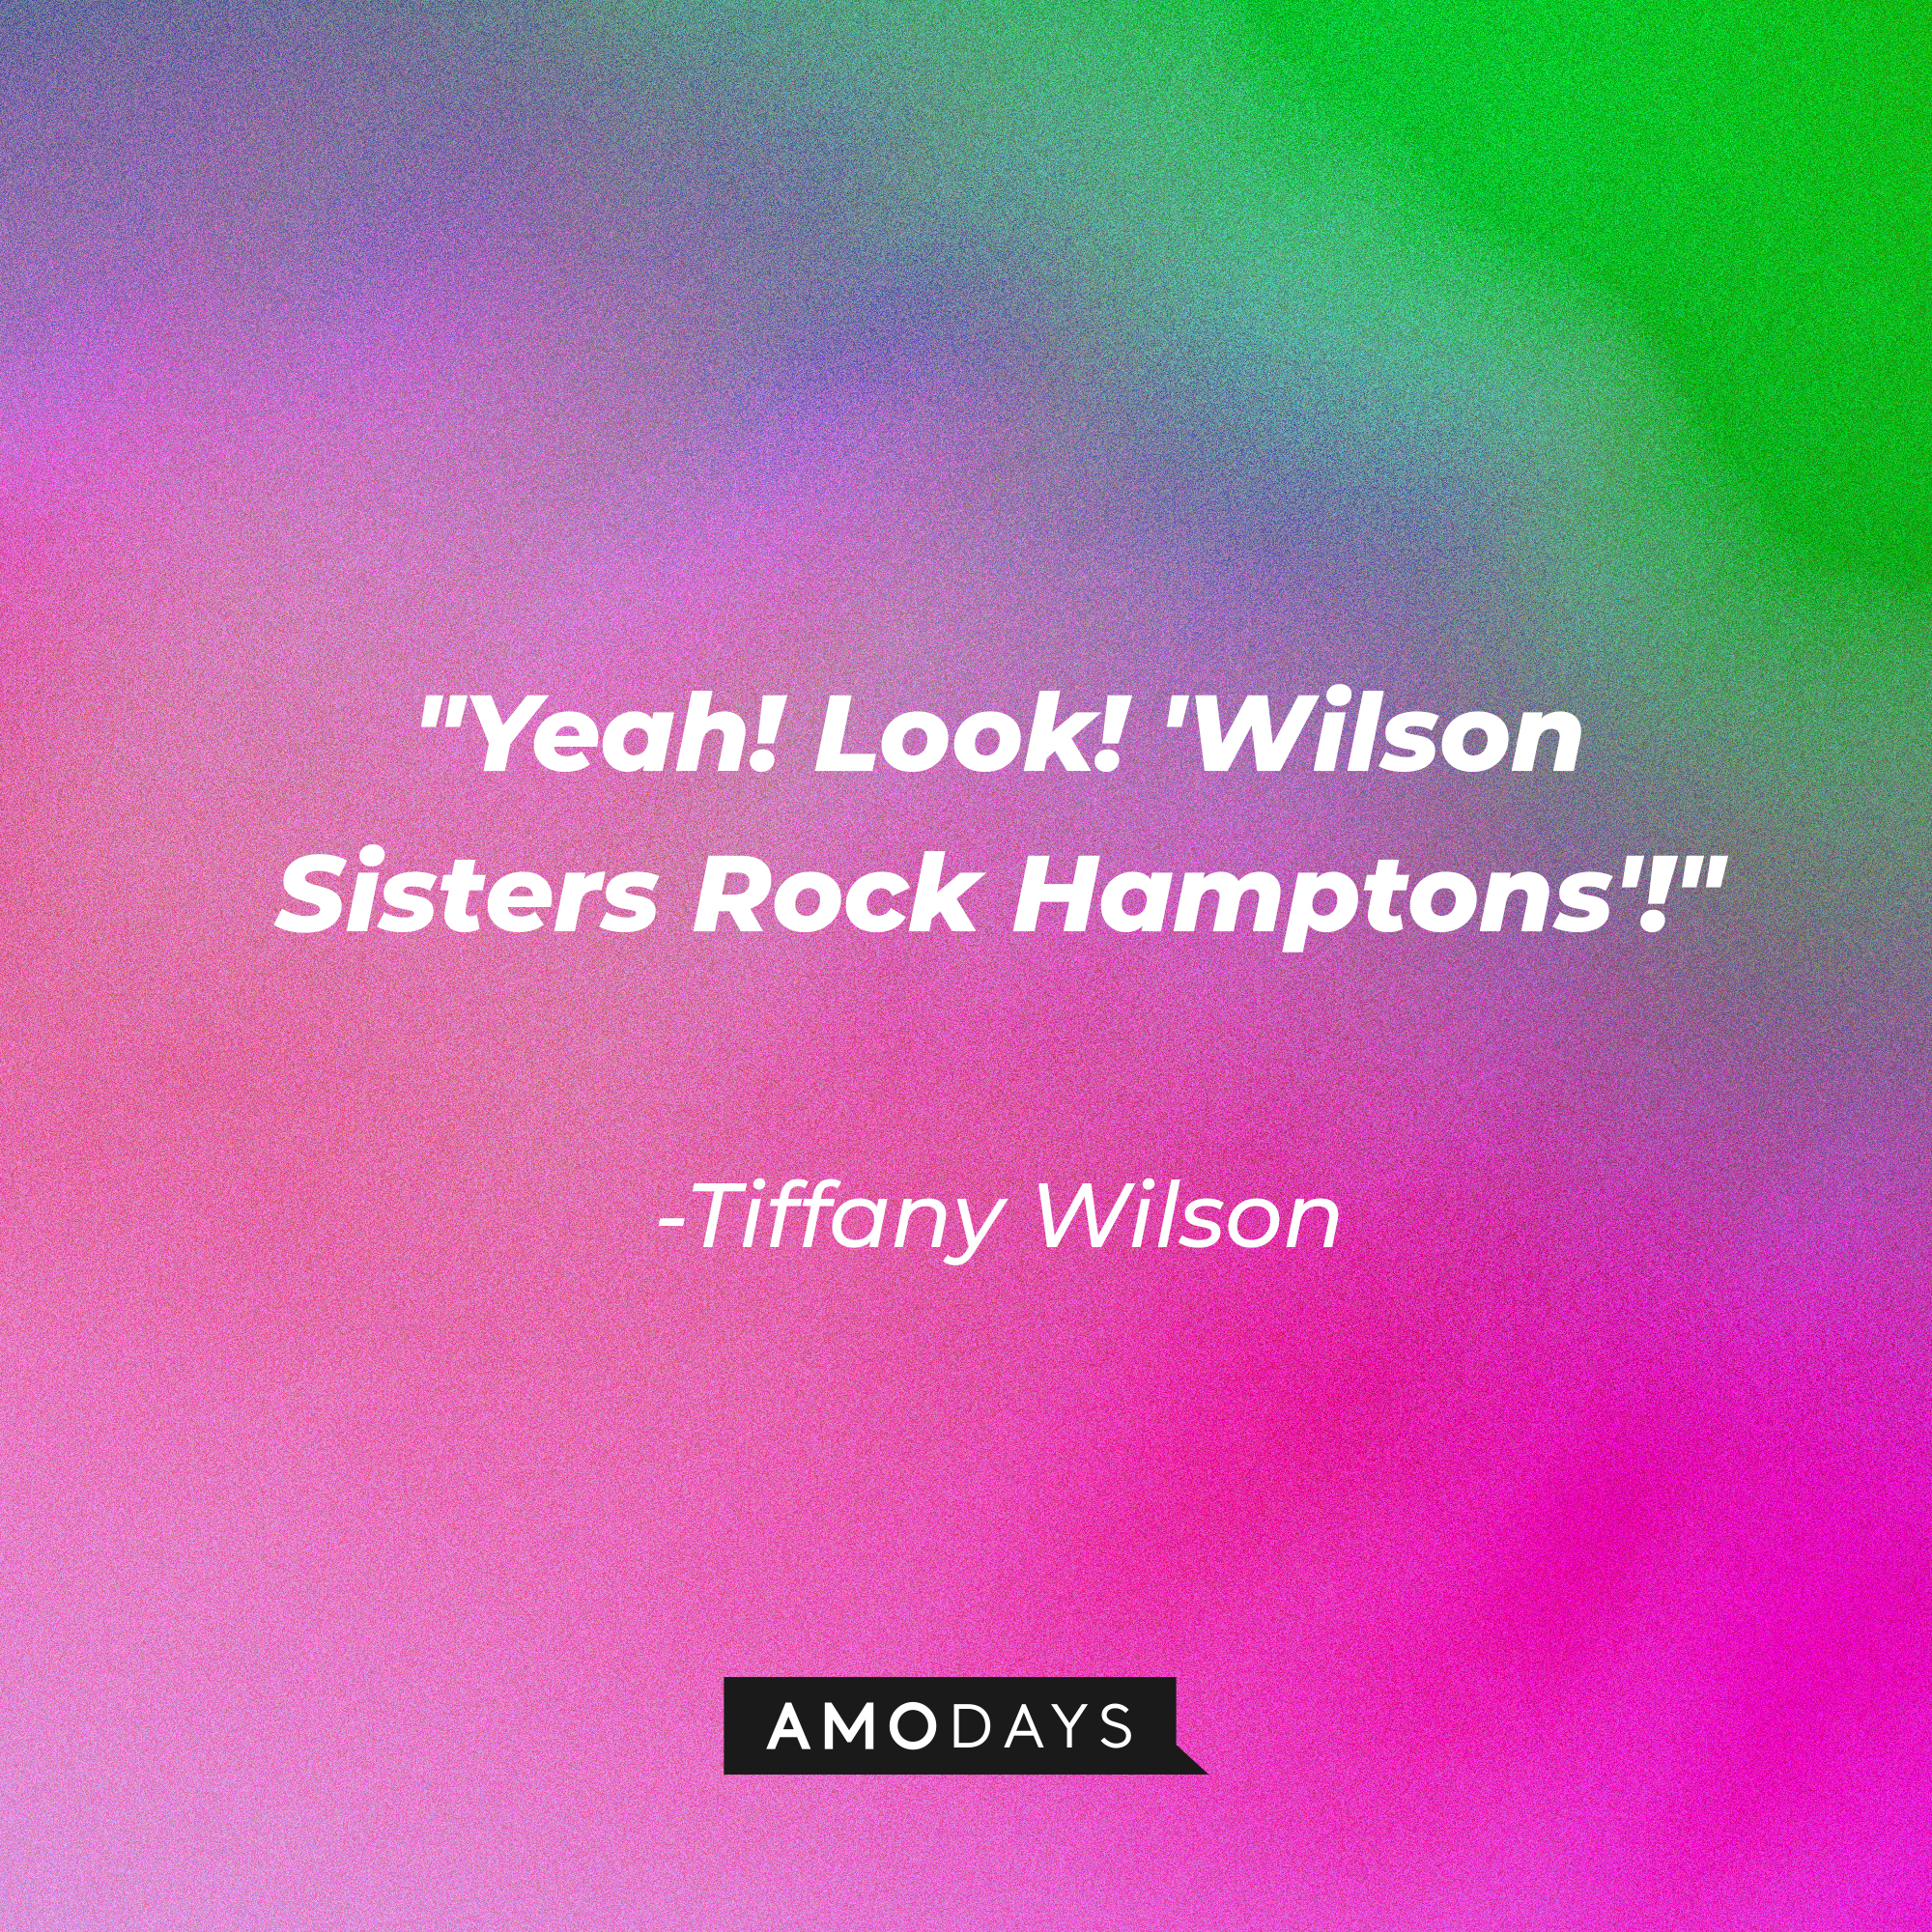 Tiffany Wilson's quote: "Yeah! Look! Wilson Sisters Rock Hamptons!" | Source: Amodays